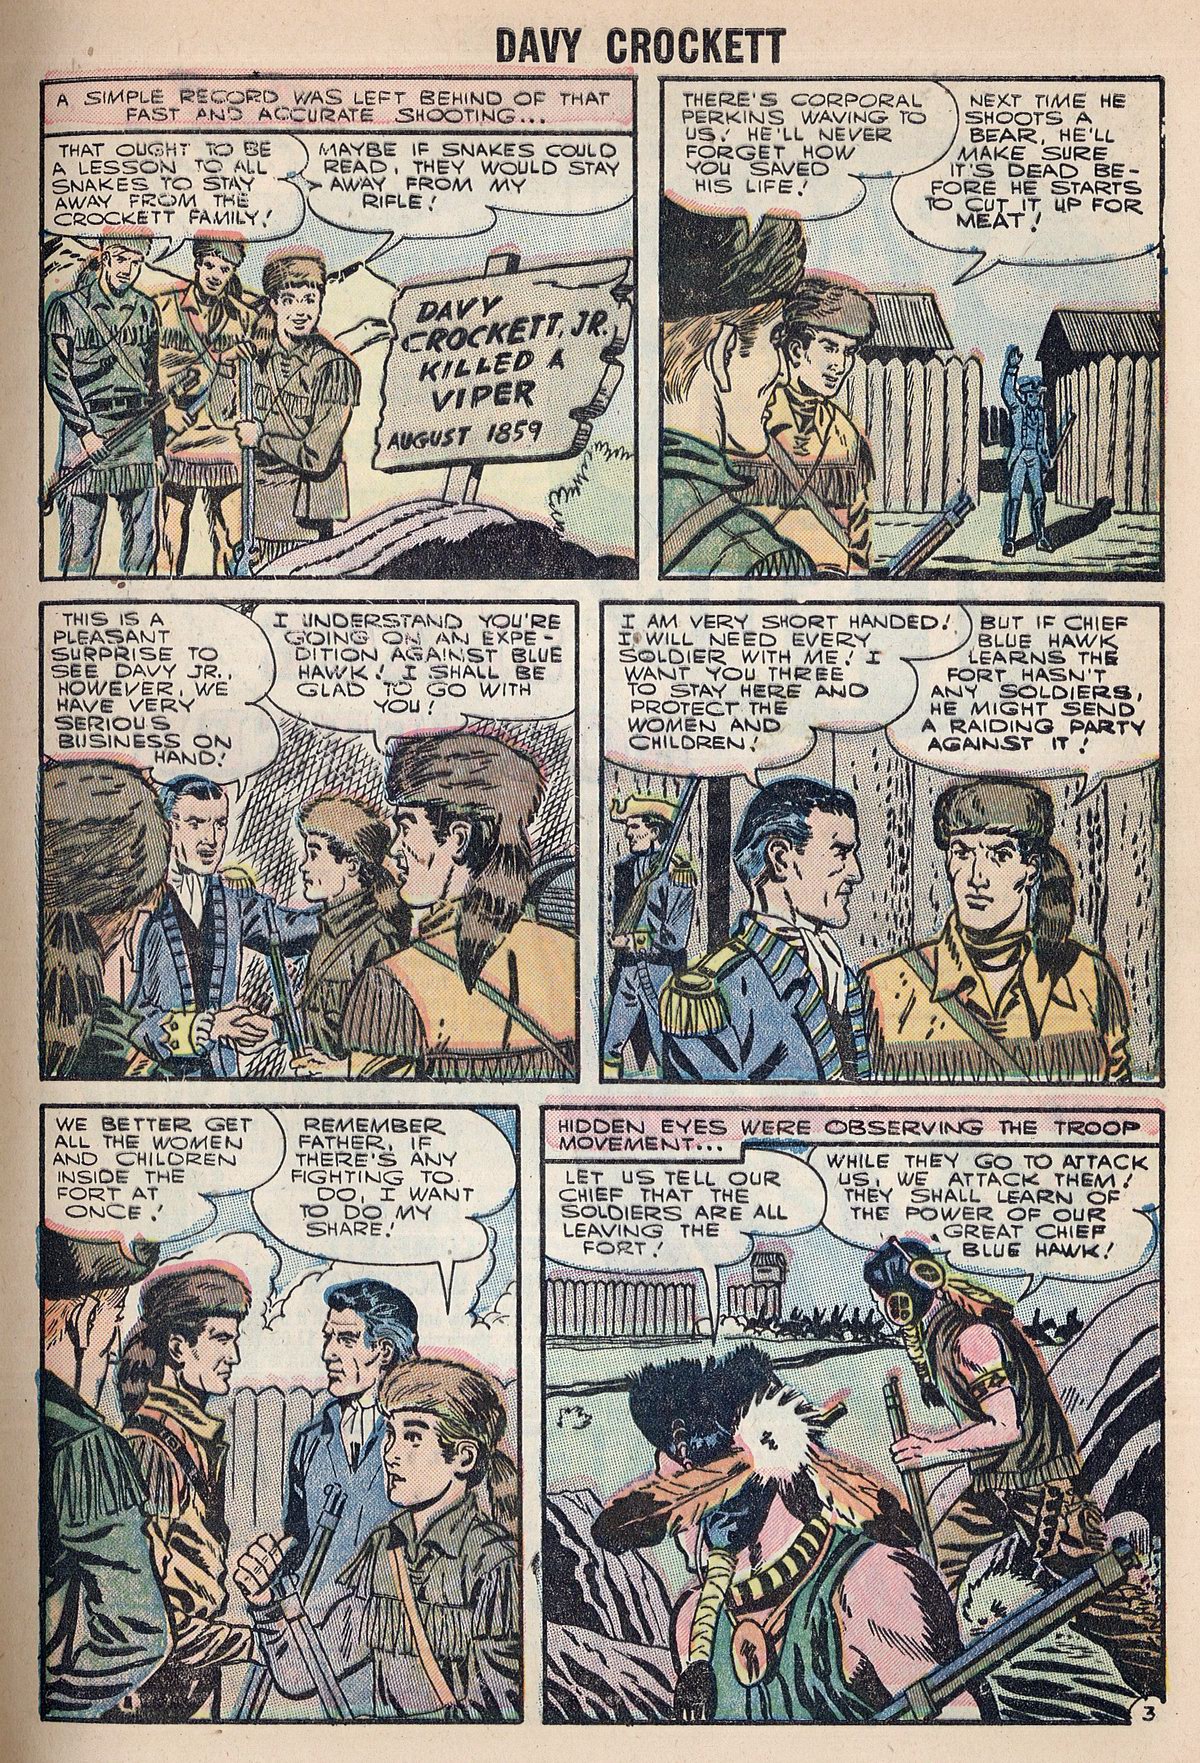 Read online Davy Crockett comic -  Issue #4 - 5